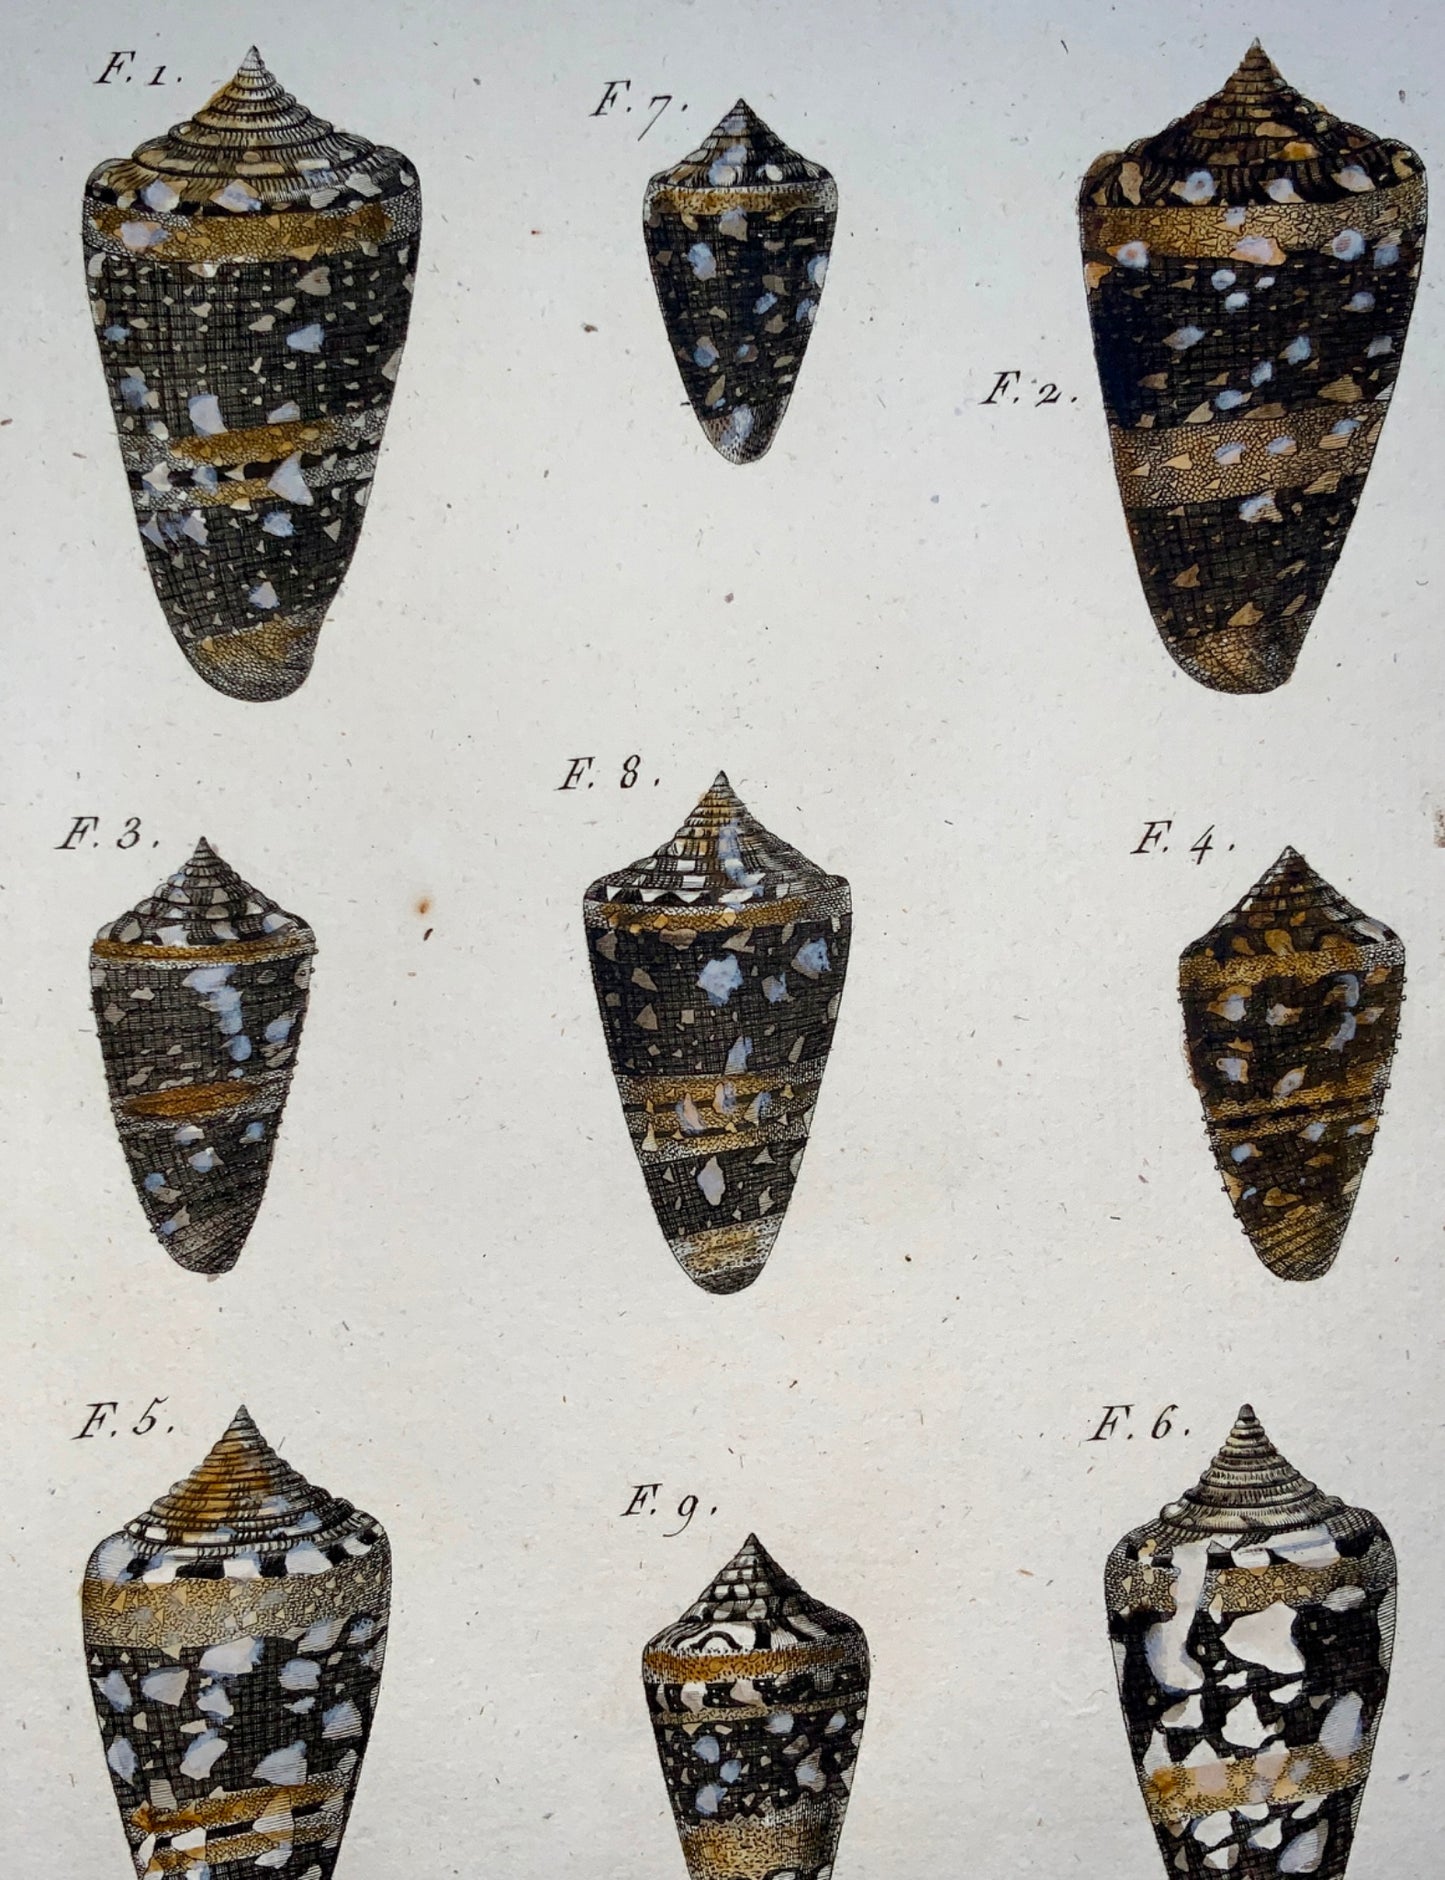 1789 J. B. Lamarck; H.J. Redoute - CONE Conus Seashell Conchology hand colour